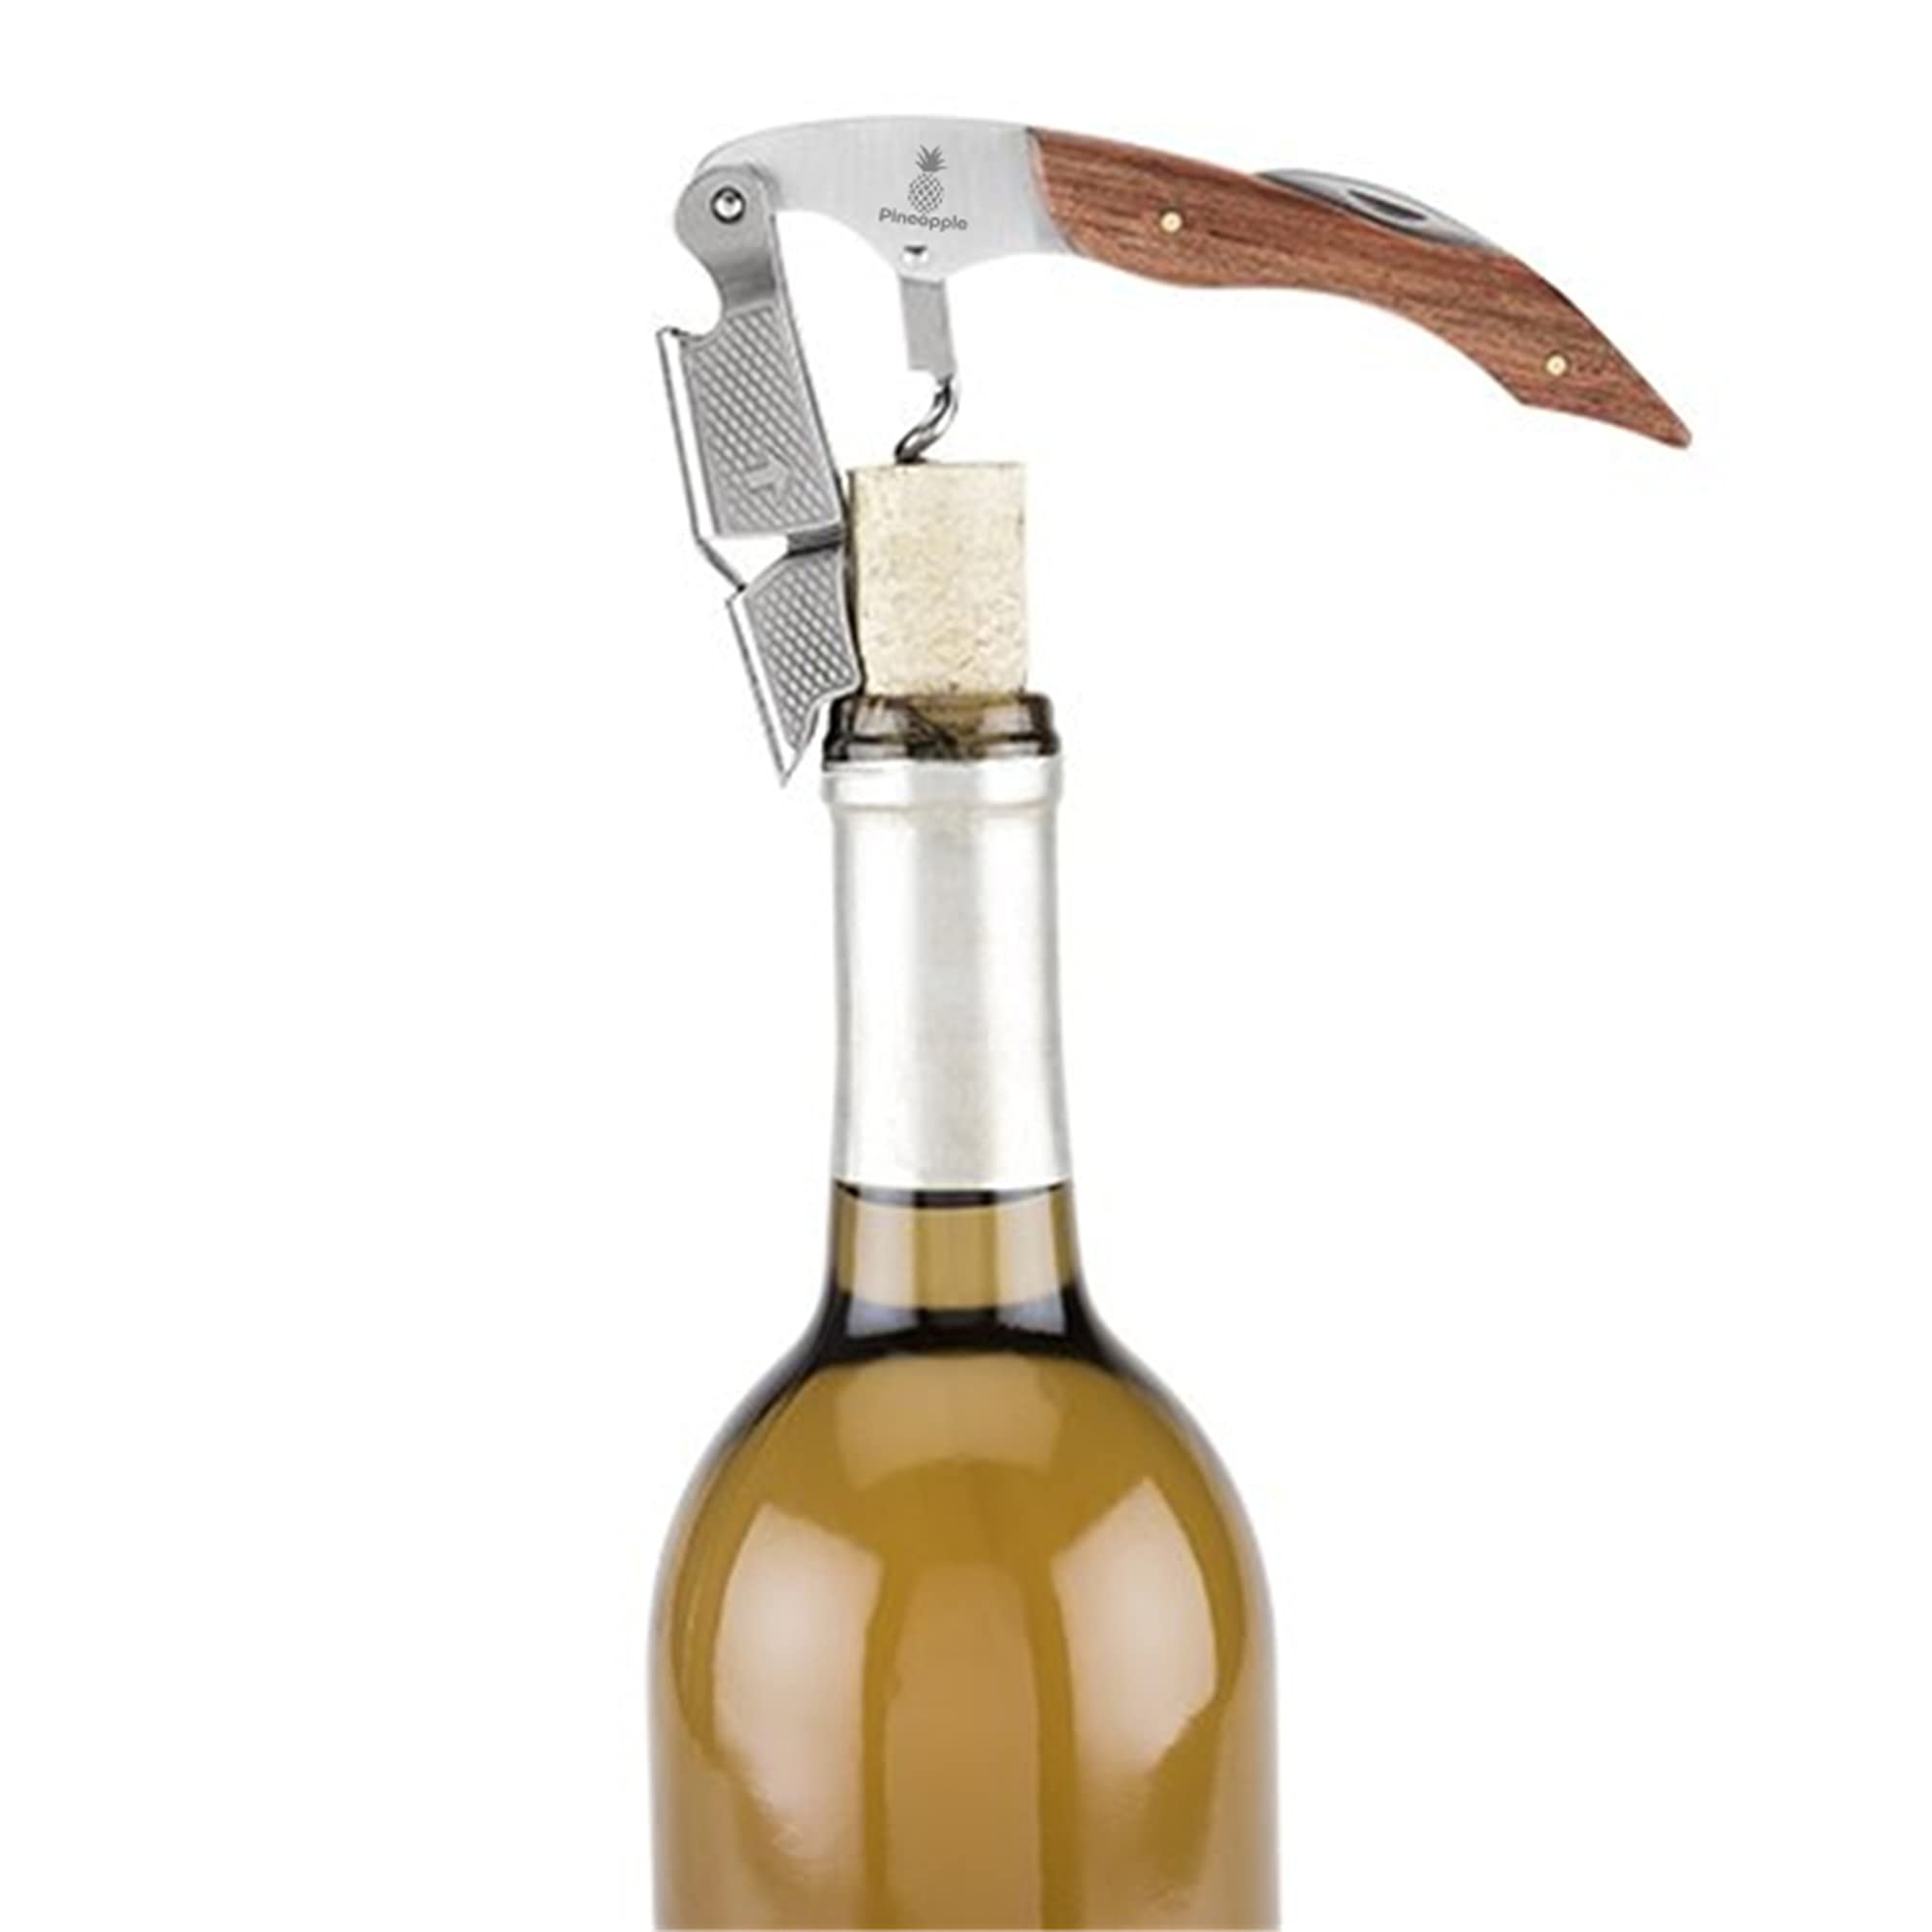 Pineapple [2 Pack] Corkscrew Wine Opener with Foil Cutter, Manual Bottle Opener Wine Key for Servers, Bartenders, Waiters, Sommeliers (Rosewood)